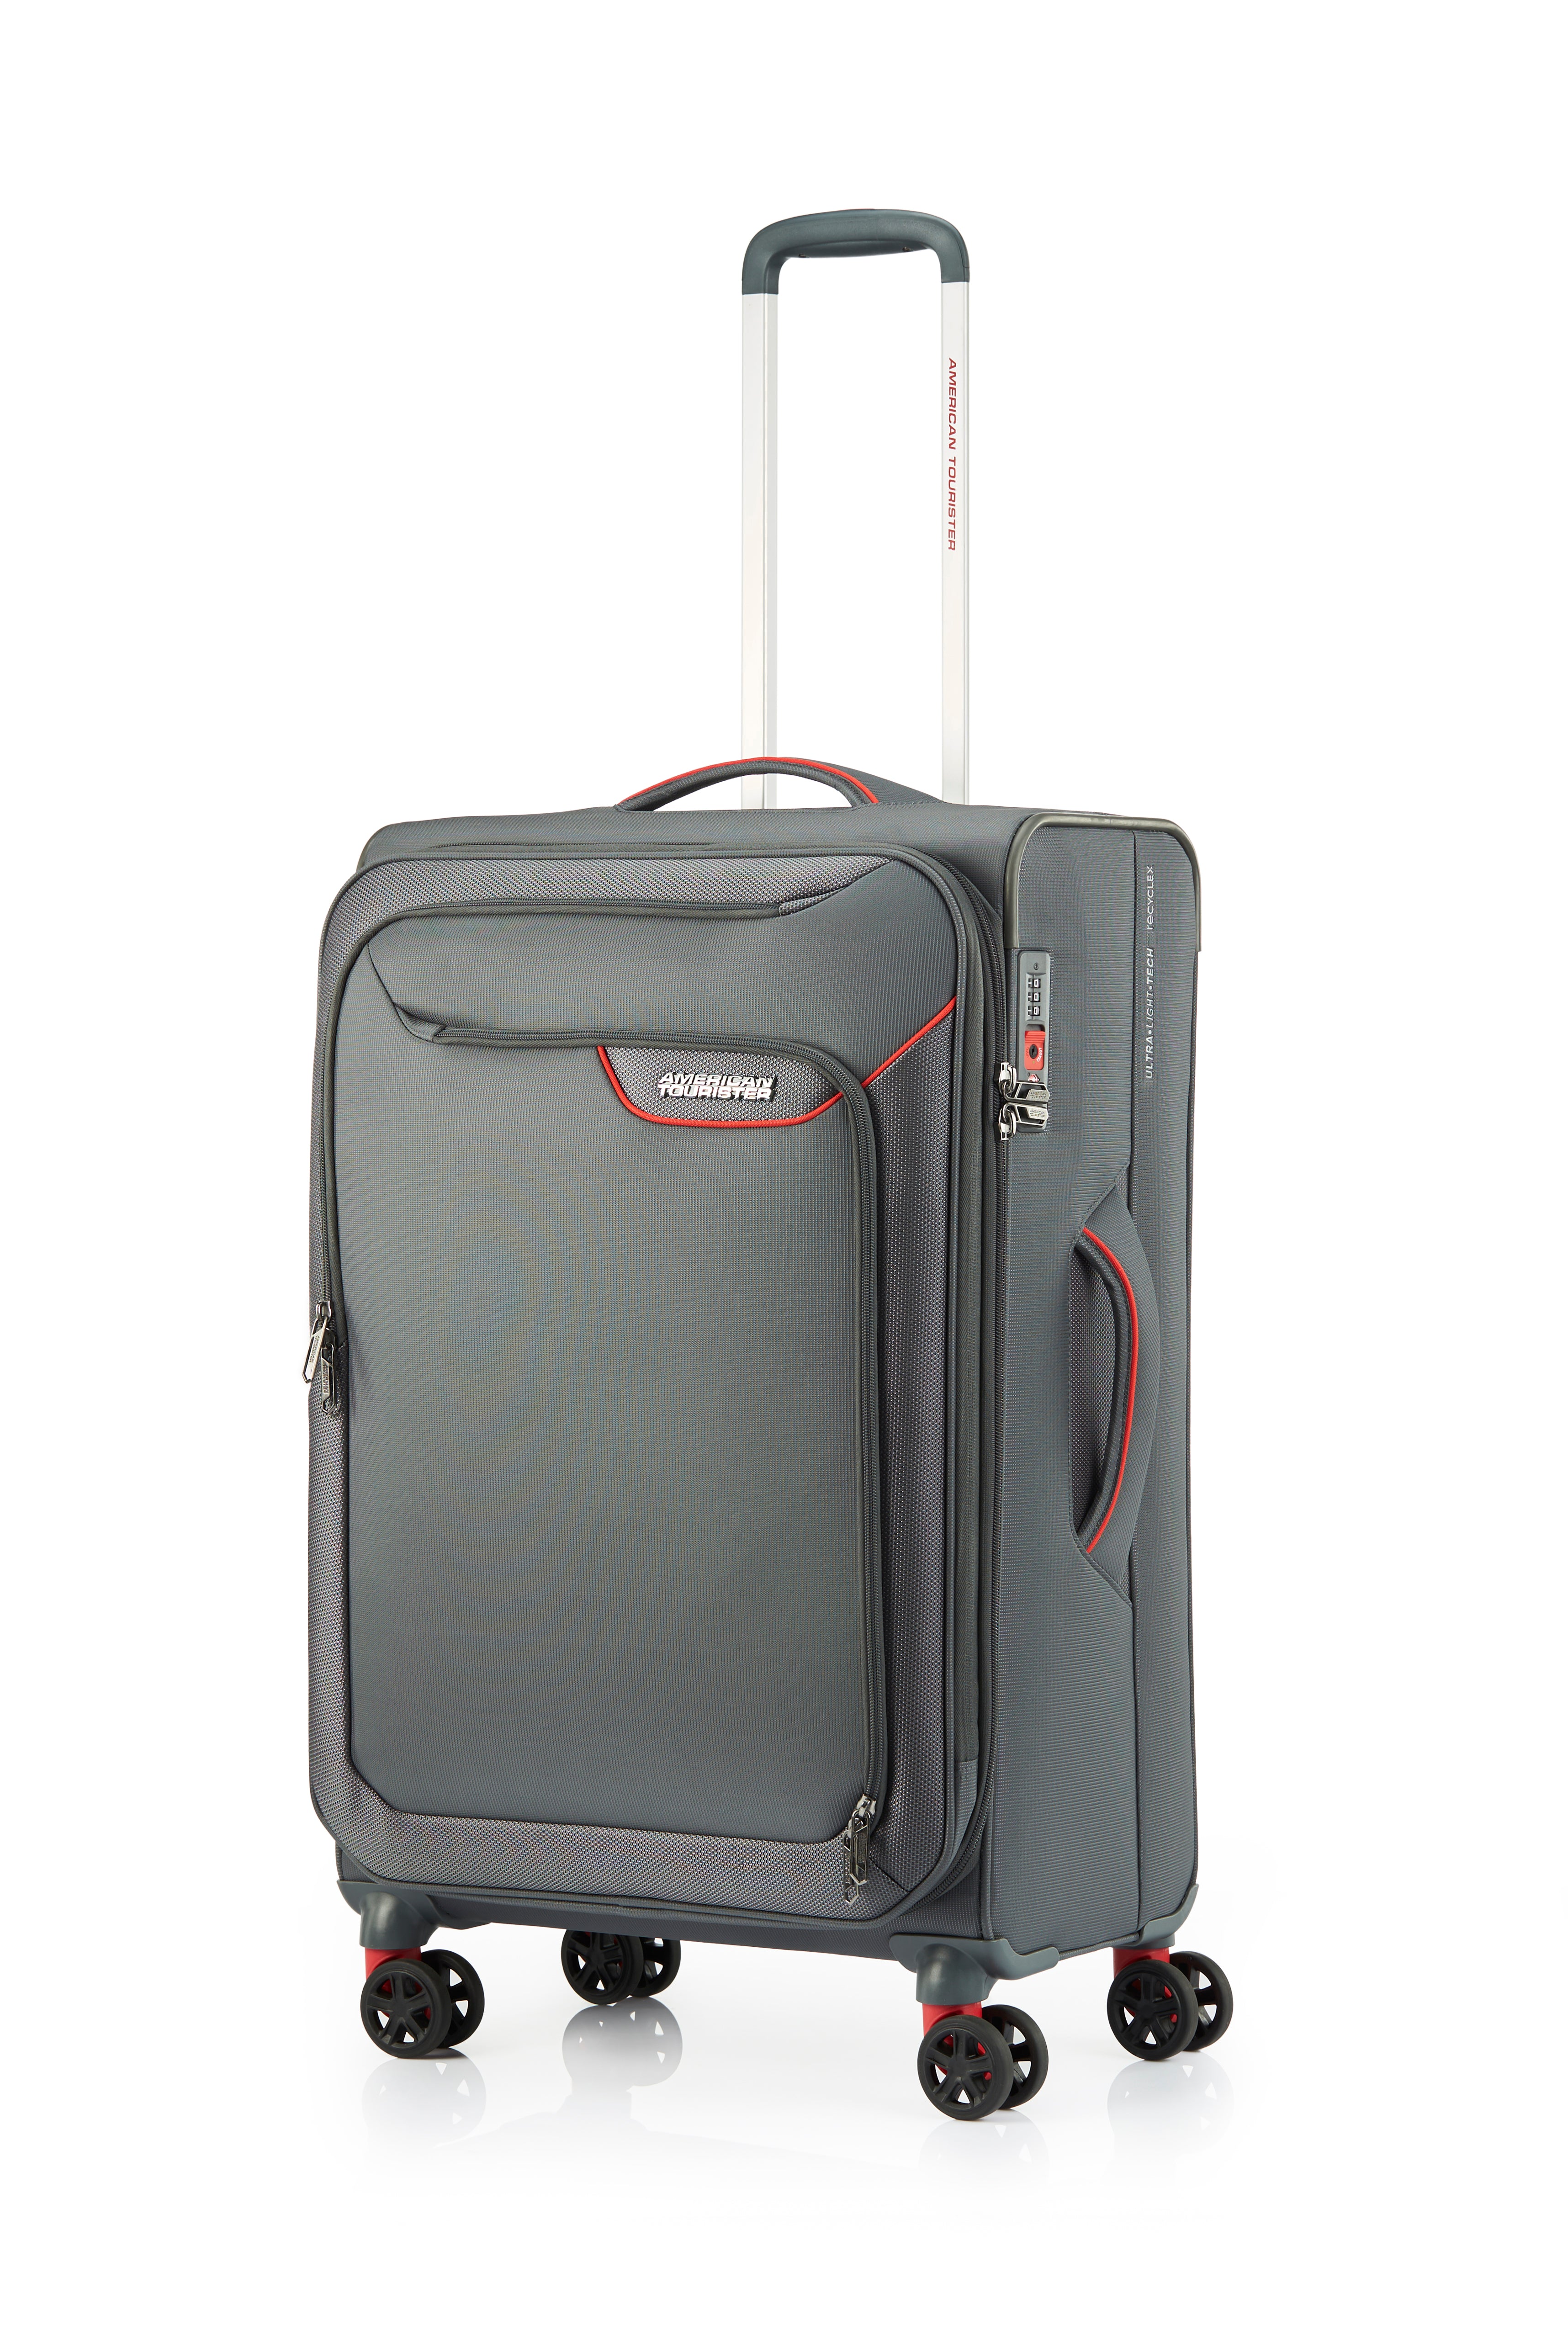 American Tourister - Applite ECO 71cm Medium Suitcase - Grey/Red-1